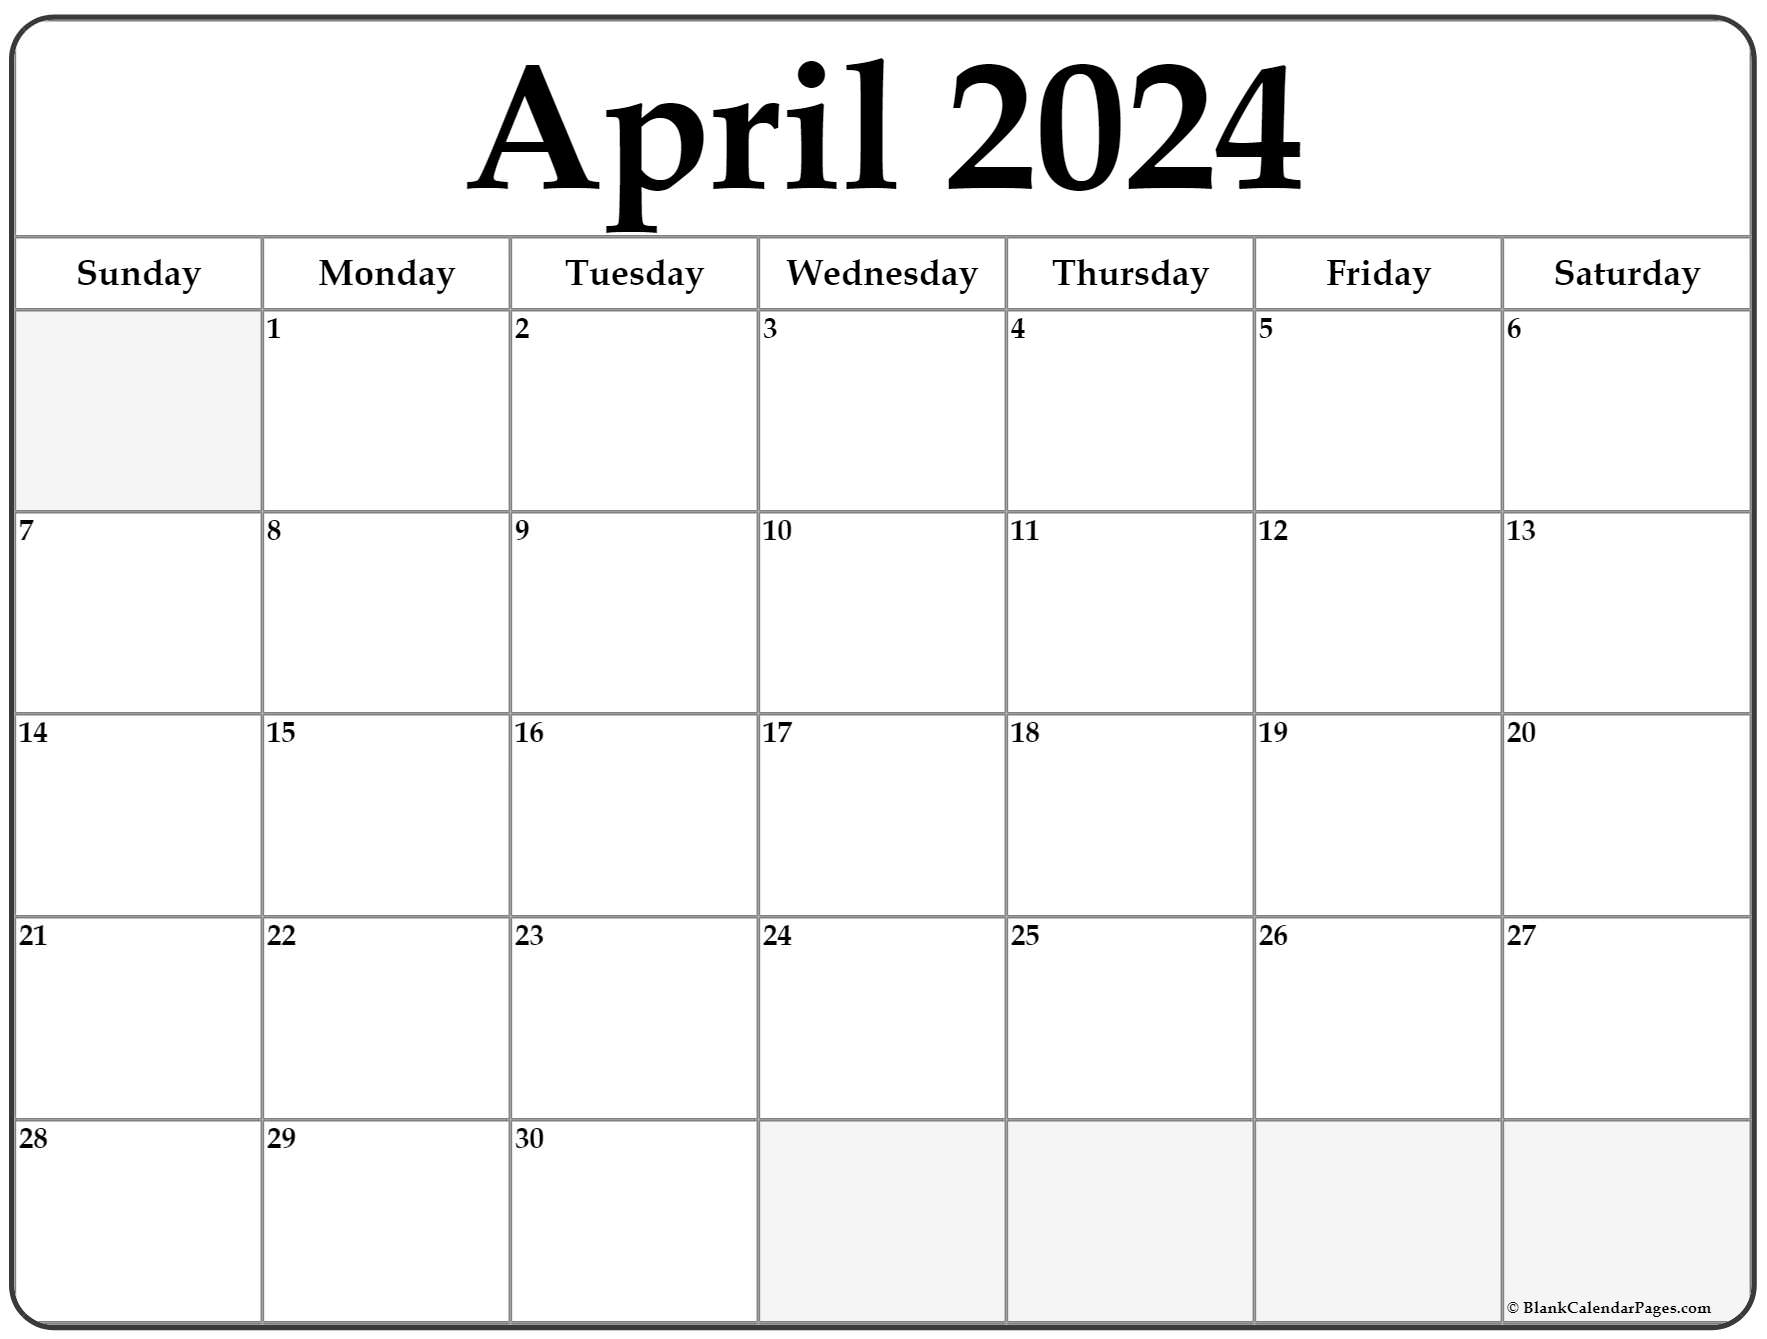 Printable Calendar April 2022 April 2022 Calendar | Free Printable Calendar Templates